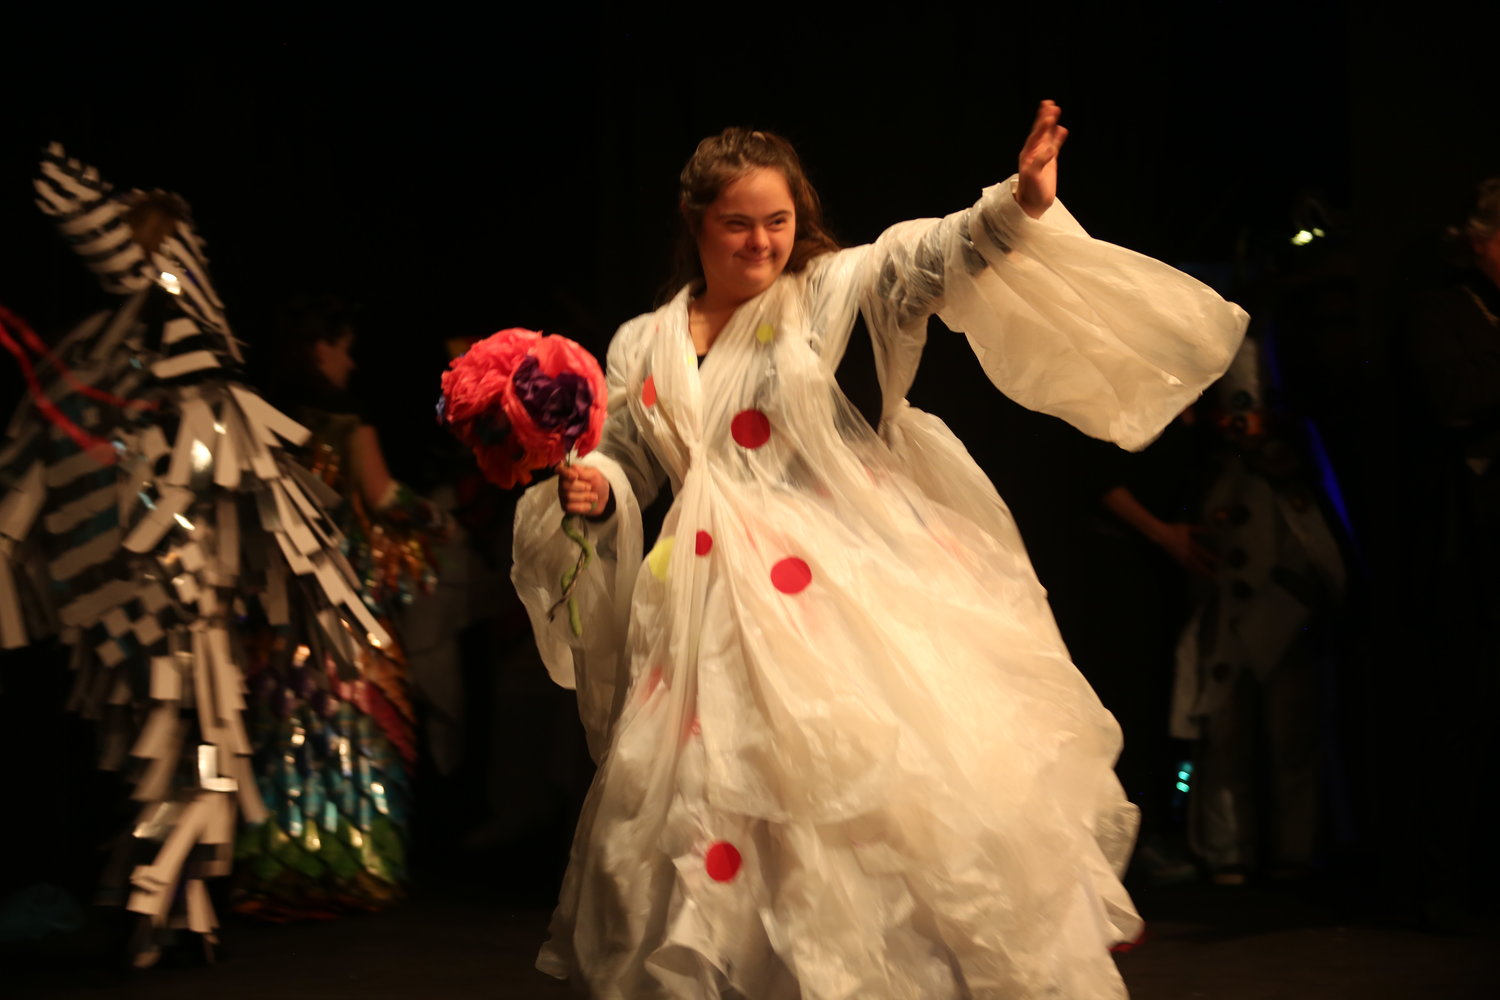 Port Townsend's Emma McAdam models "The Polka Dotted Dress" designed with transition program student Bryan Fenton.